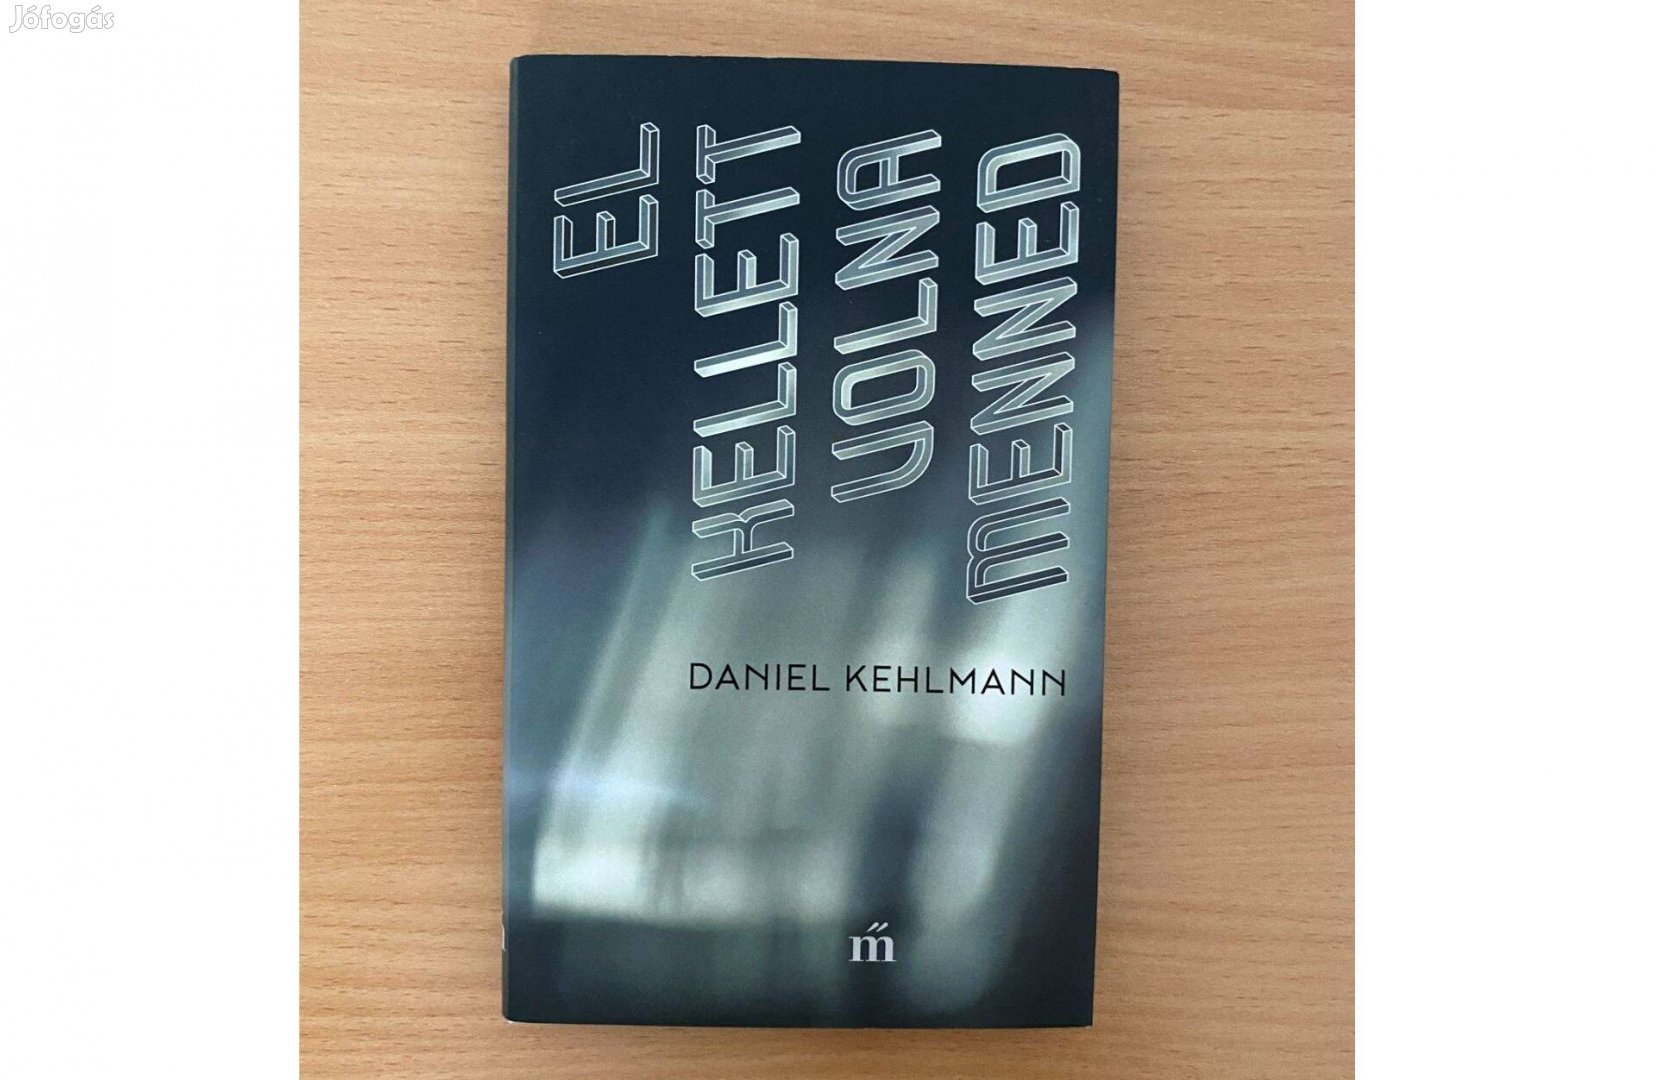 Daniel Kehlmann: El kellett volna menned című könyv